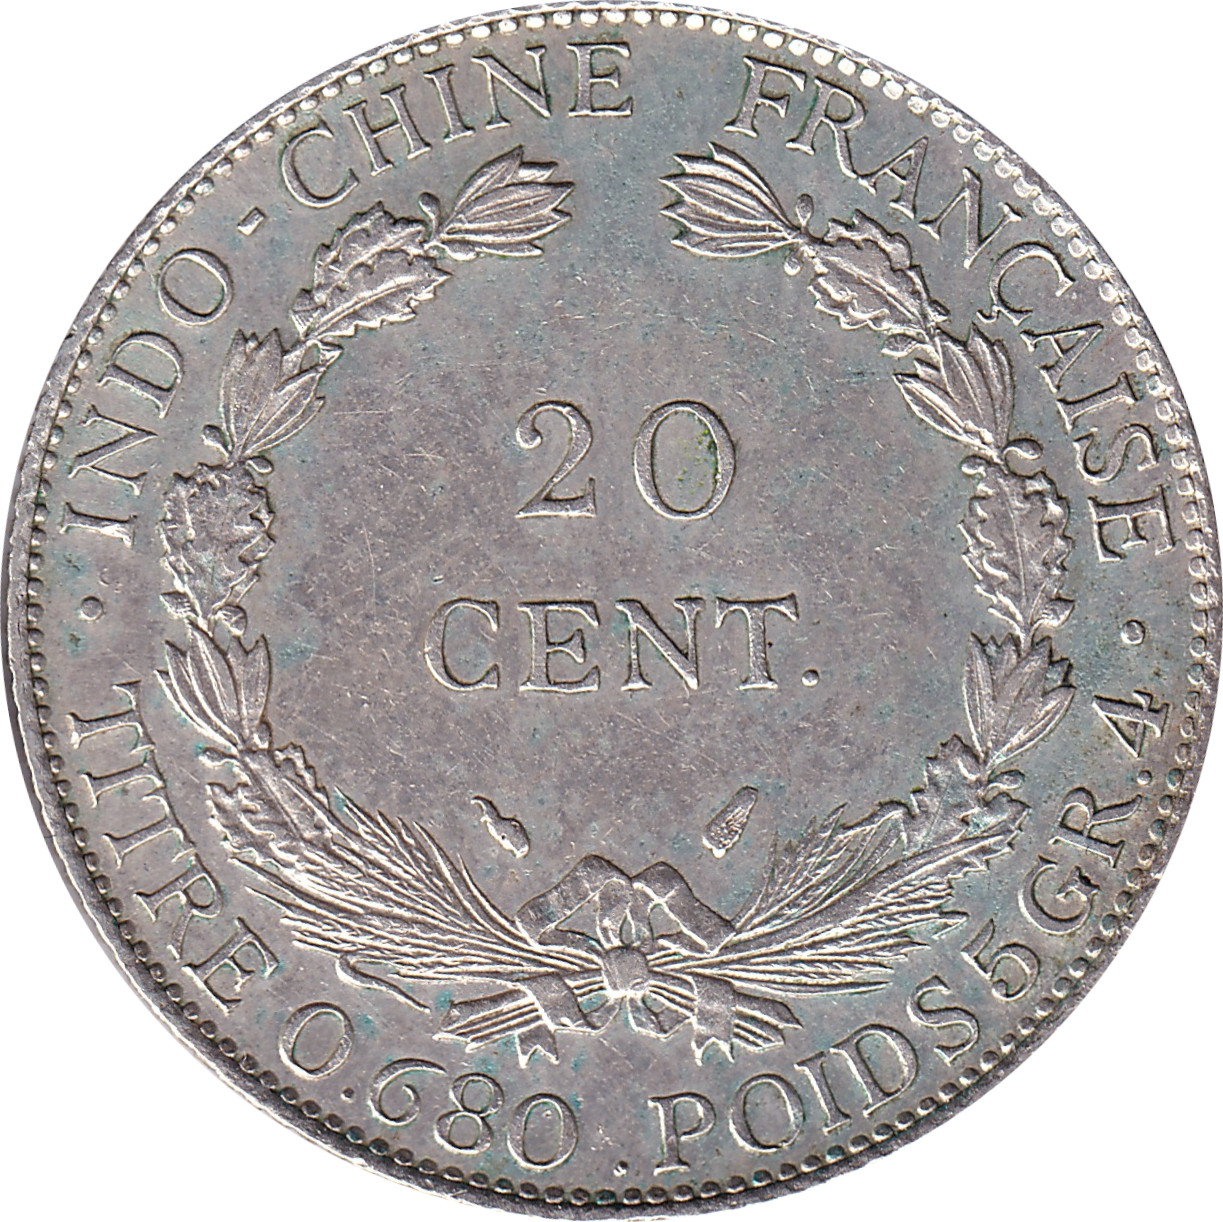 20 cents - Commerce